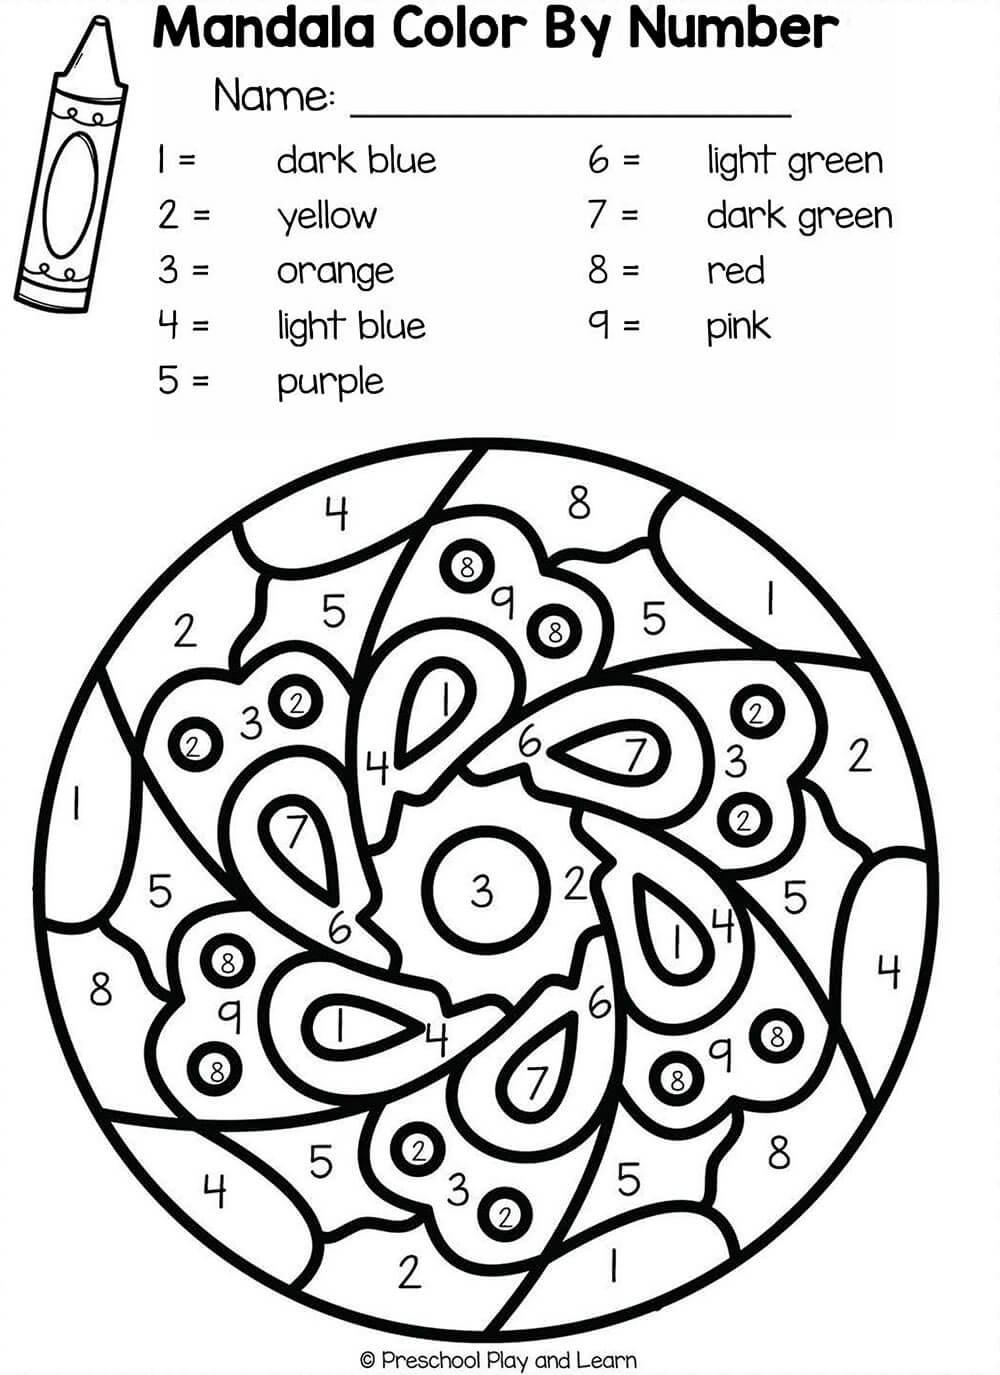 Mandala Color by Number - sheet 7